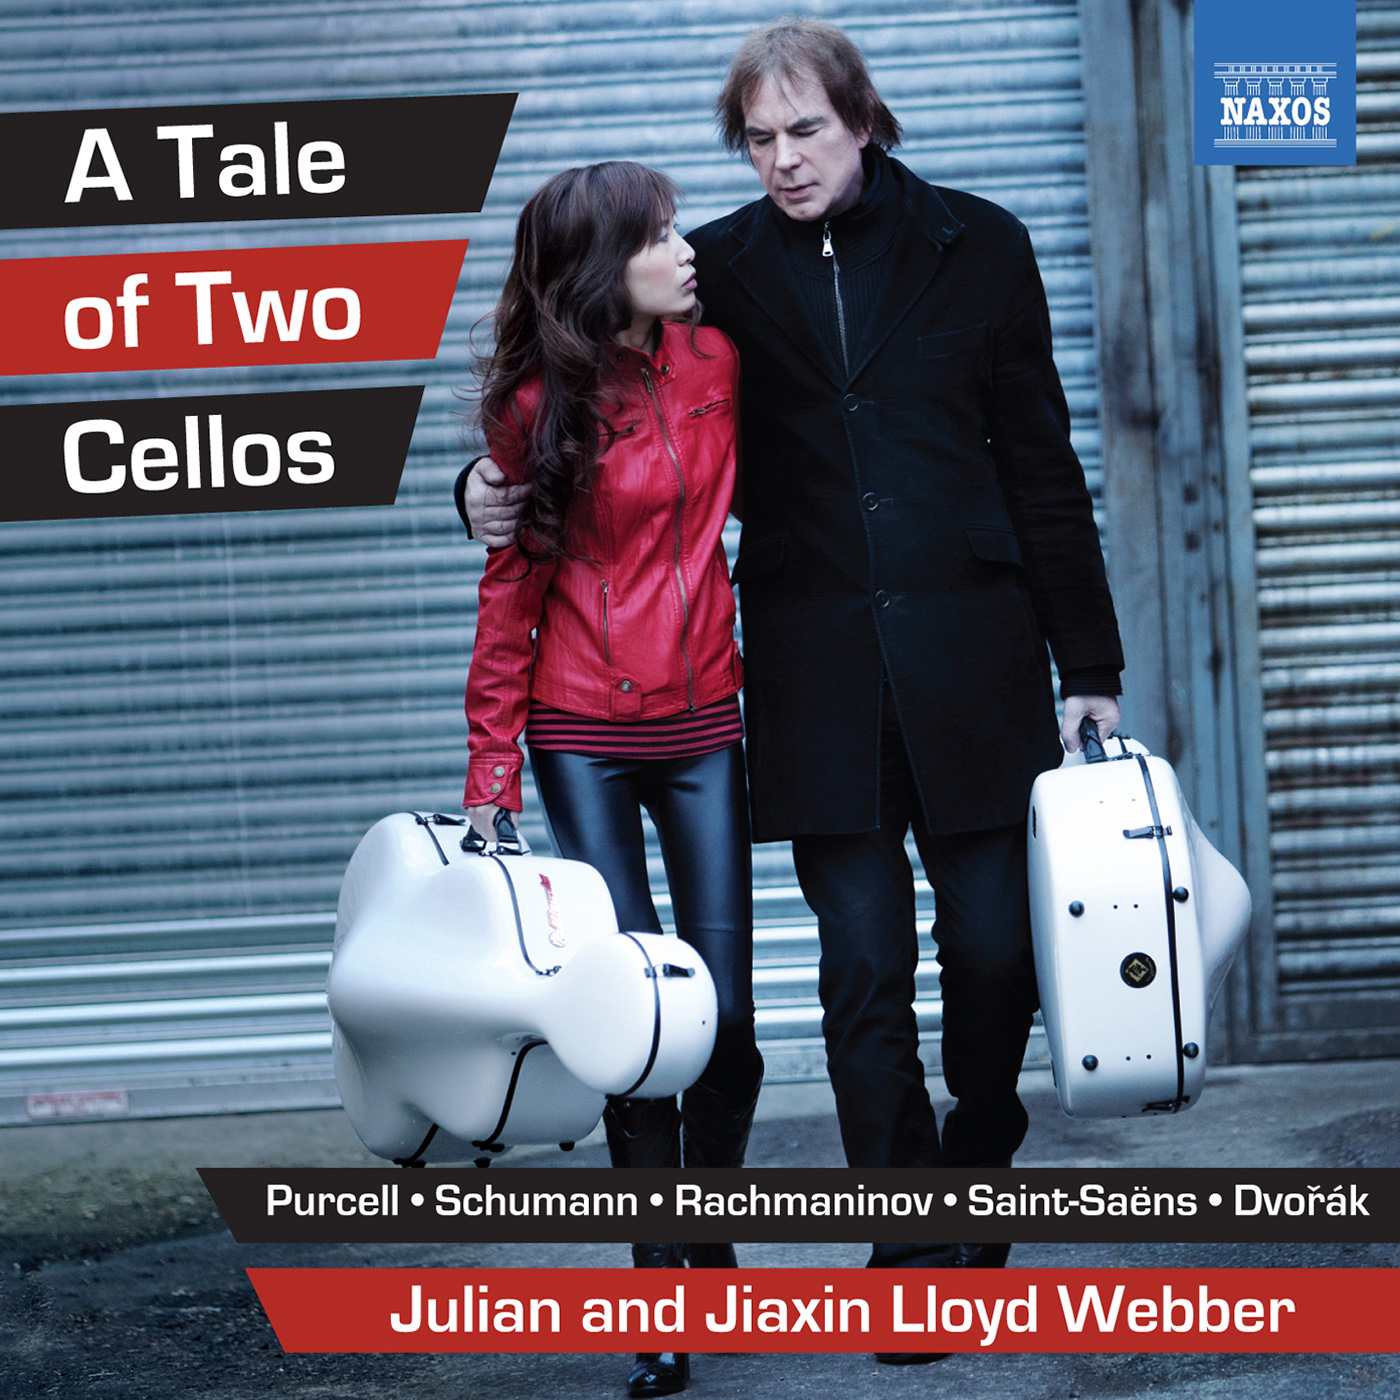 Cello Duet Arrangements (A Tale of Two Cellos) (Julian and Jiaxin Lloyd Webber, Lenehan)